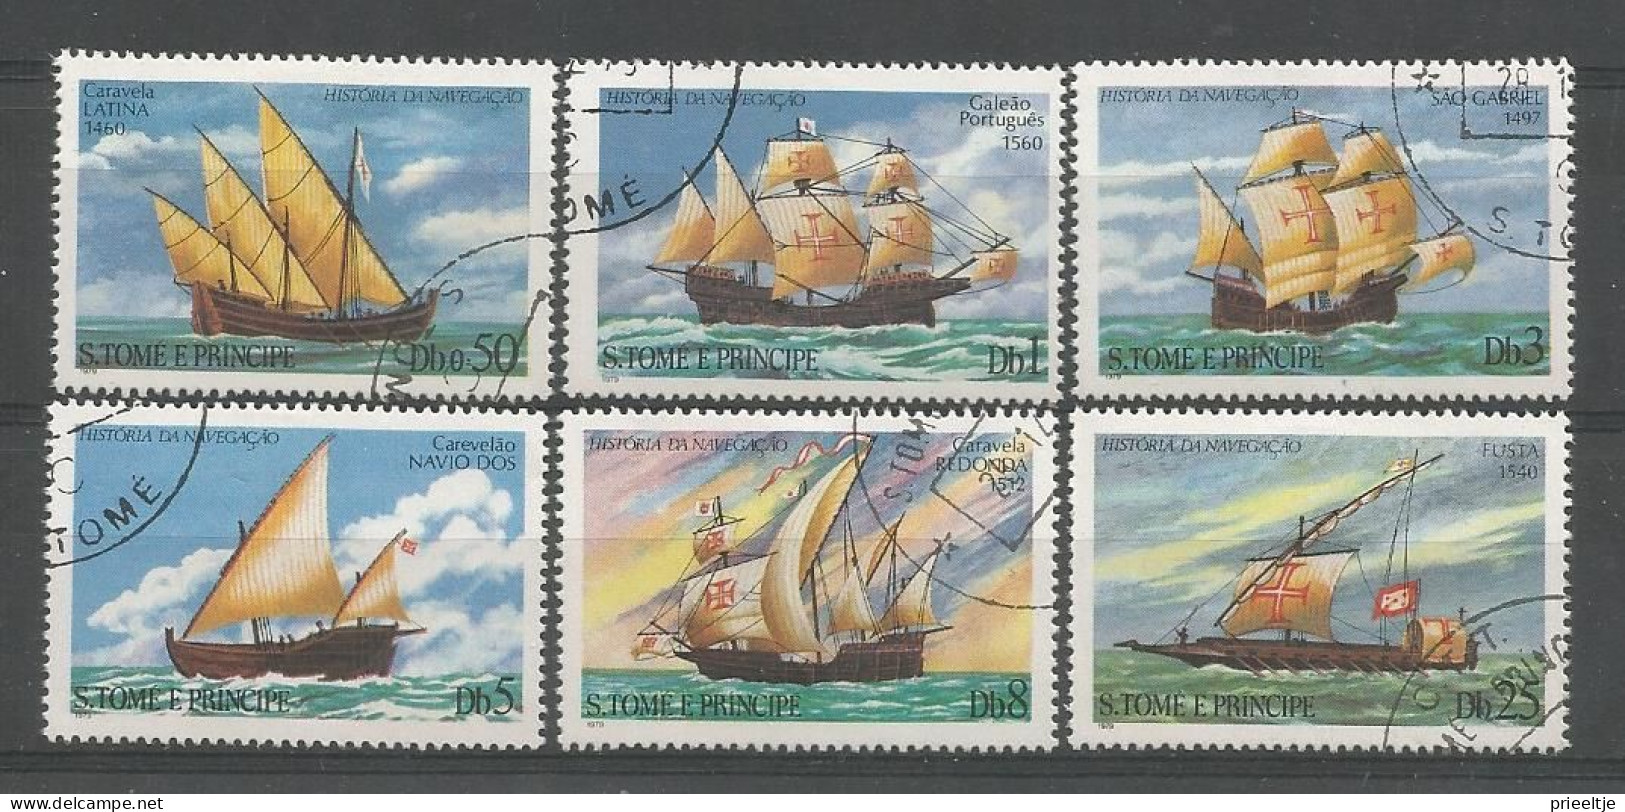 St Tome E Principe 1980 Sailing Ships Y.T. 566/571 (0) - Sao Tome Et Principe